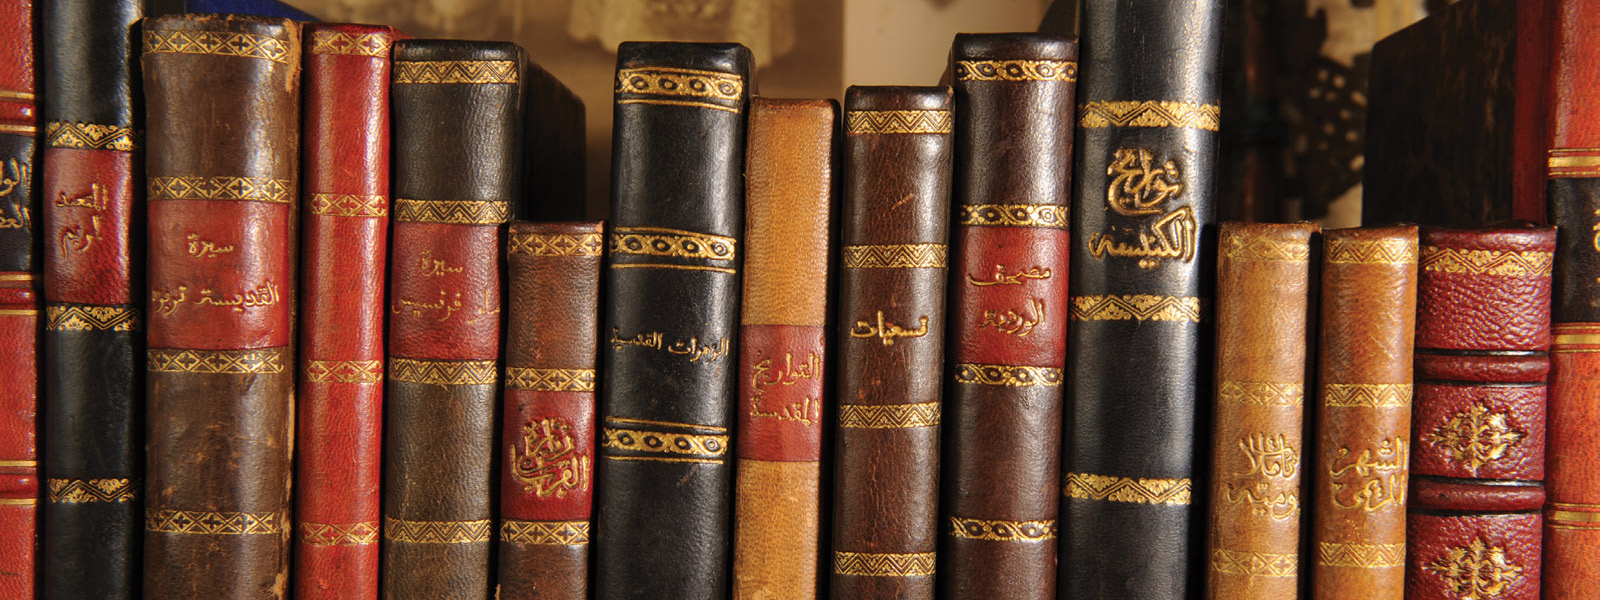 ancient-language books on shelf